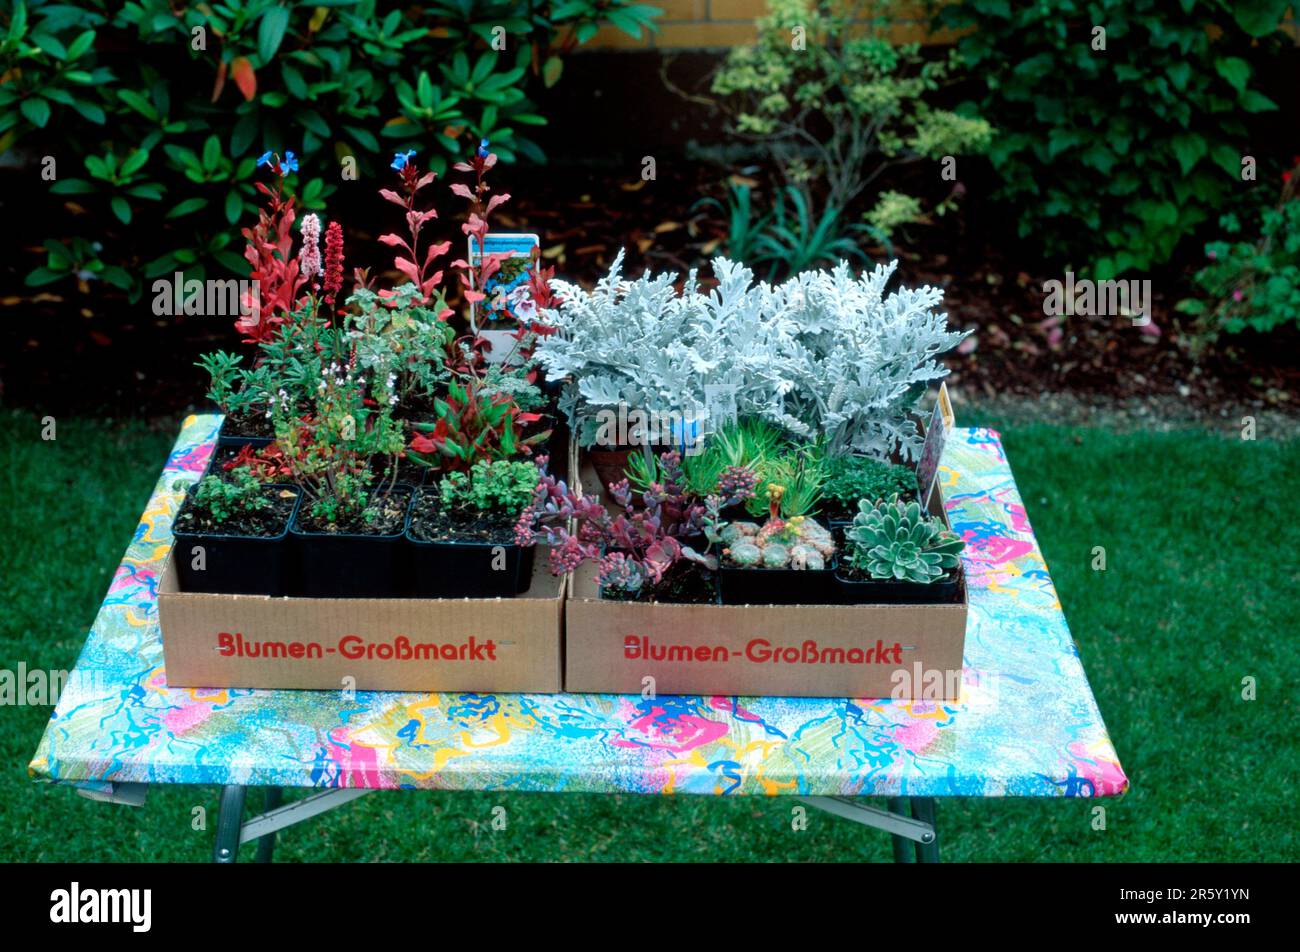 Severals garden plants in flower pots, Germany Stock Photo